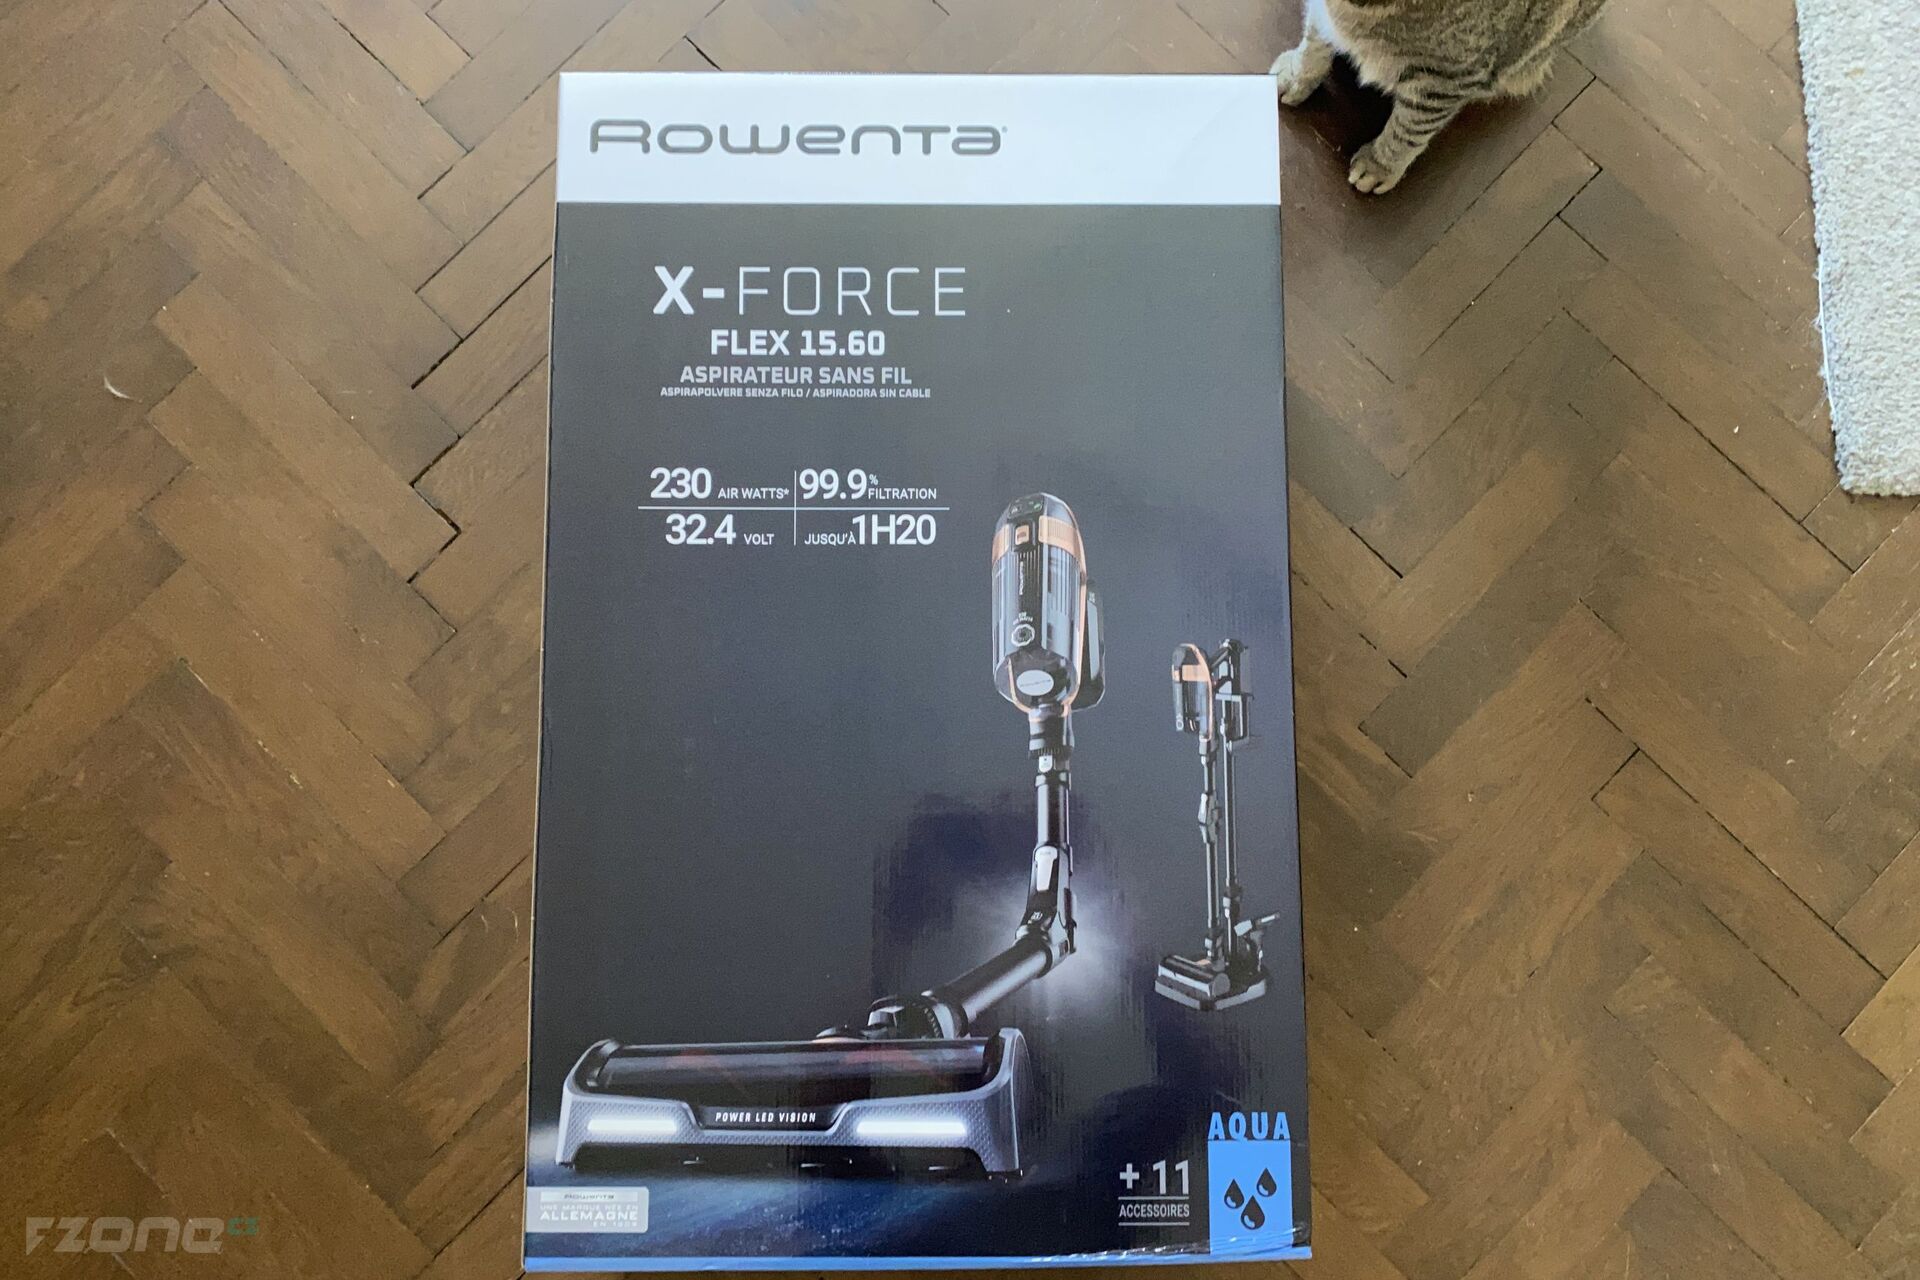 Rowenta X-force Flex 15.60 Aqua Auto 4v1